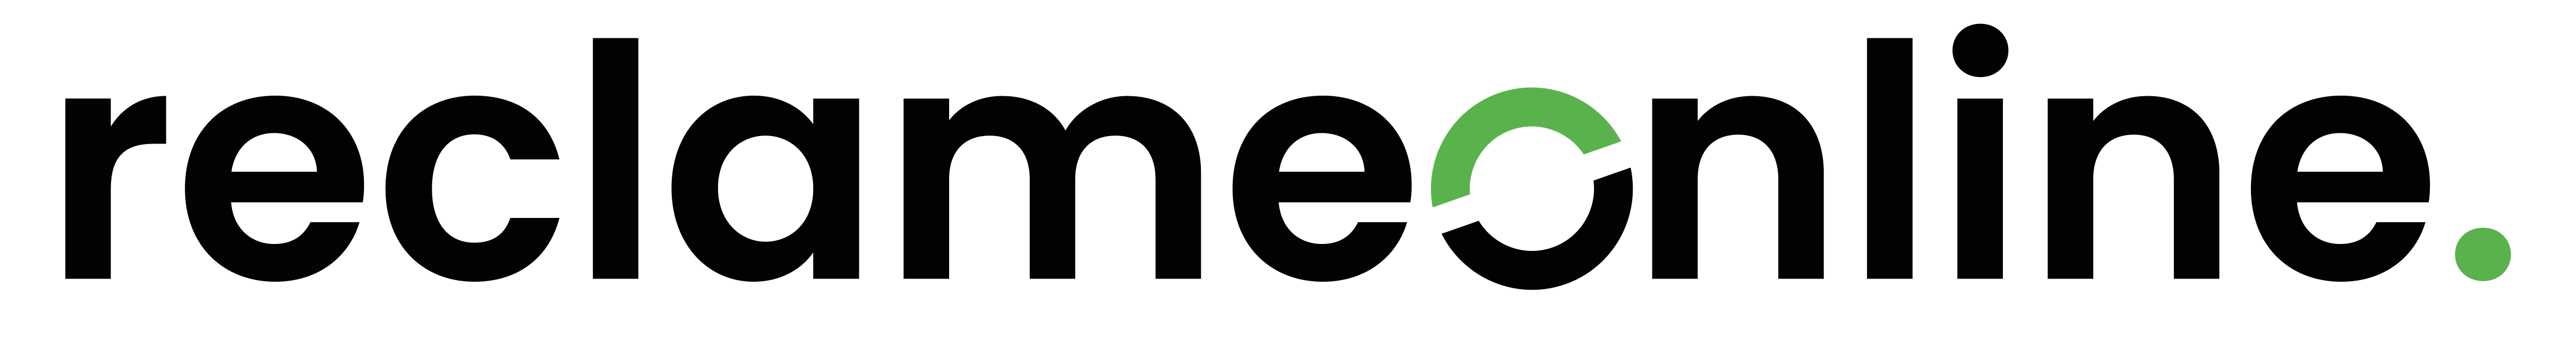 reclameonline-logo